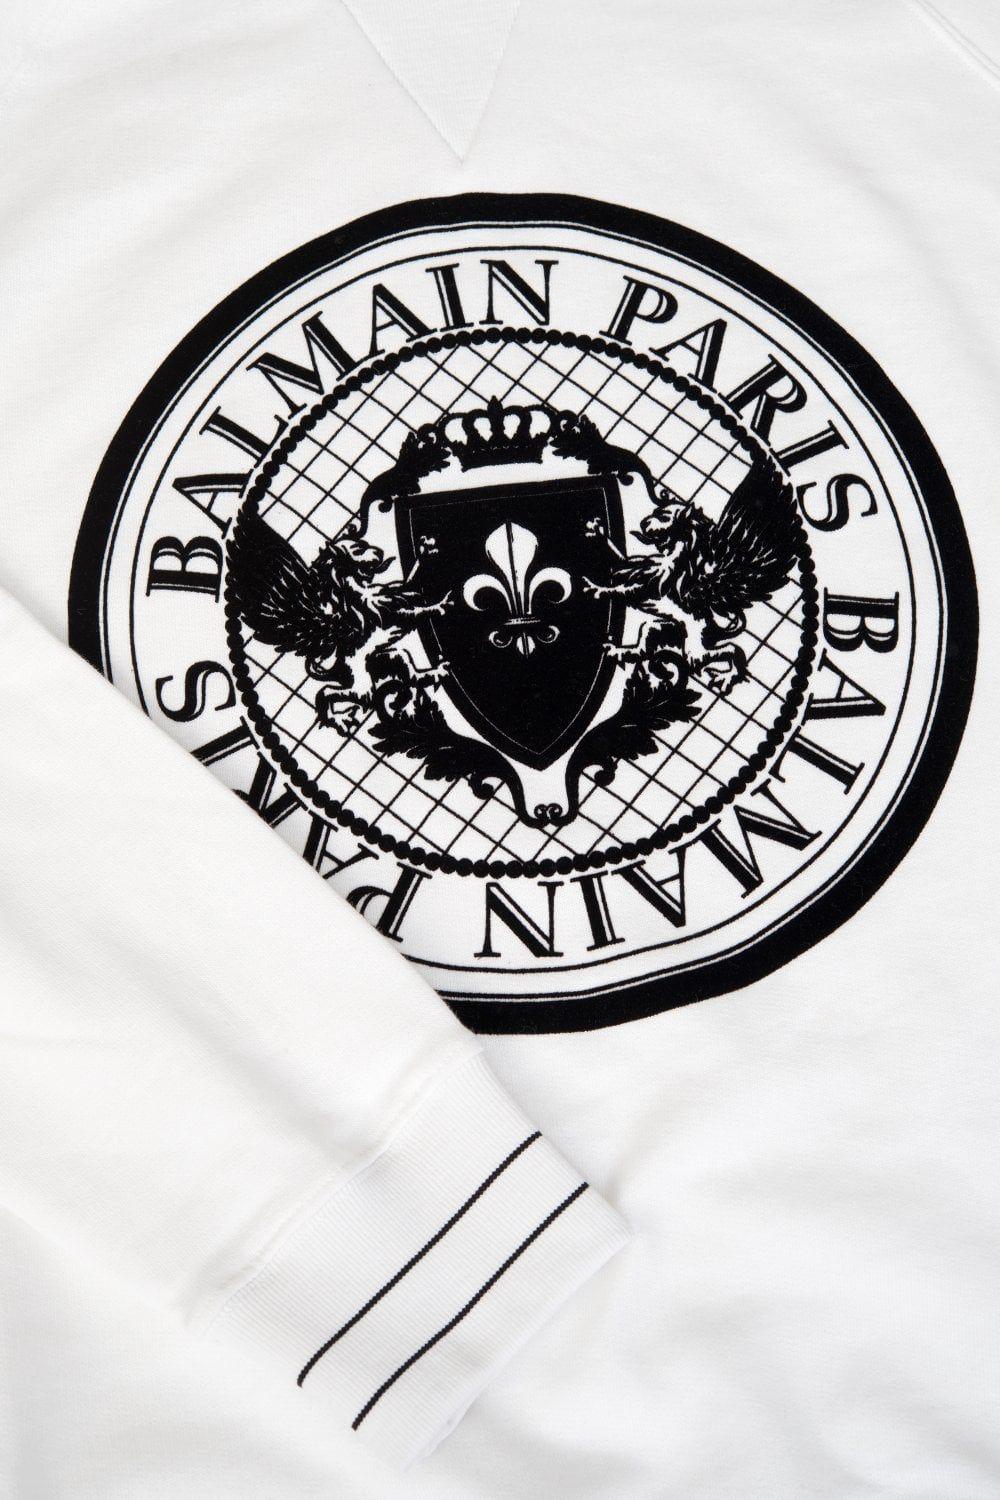 Balmain Paris Logo - BALMAIN Balmain Paris Coin Logo Sweatshirt - Clothing from Circle ...